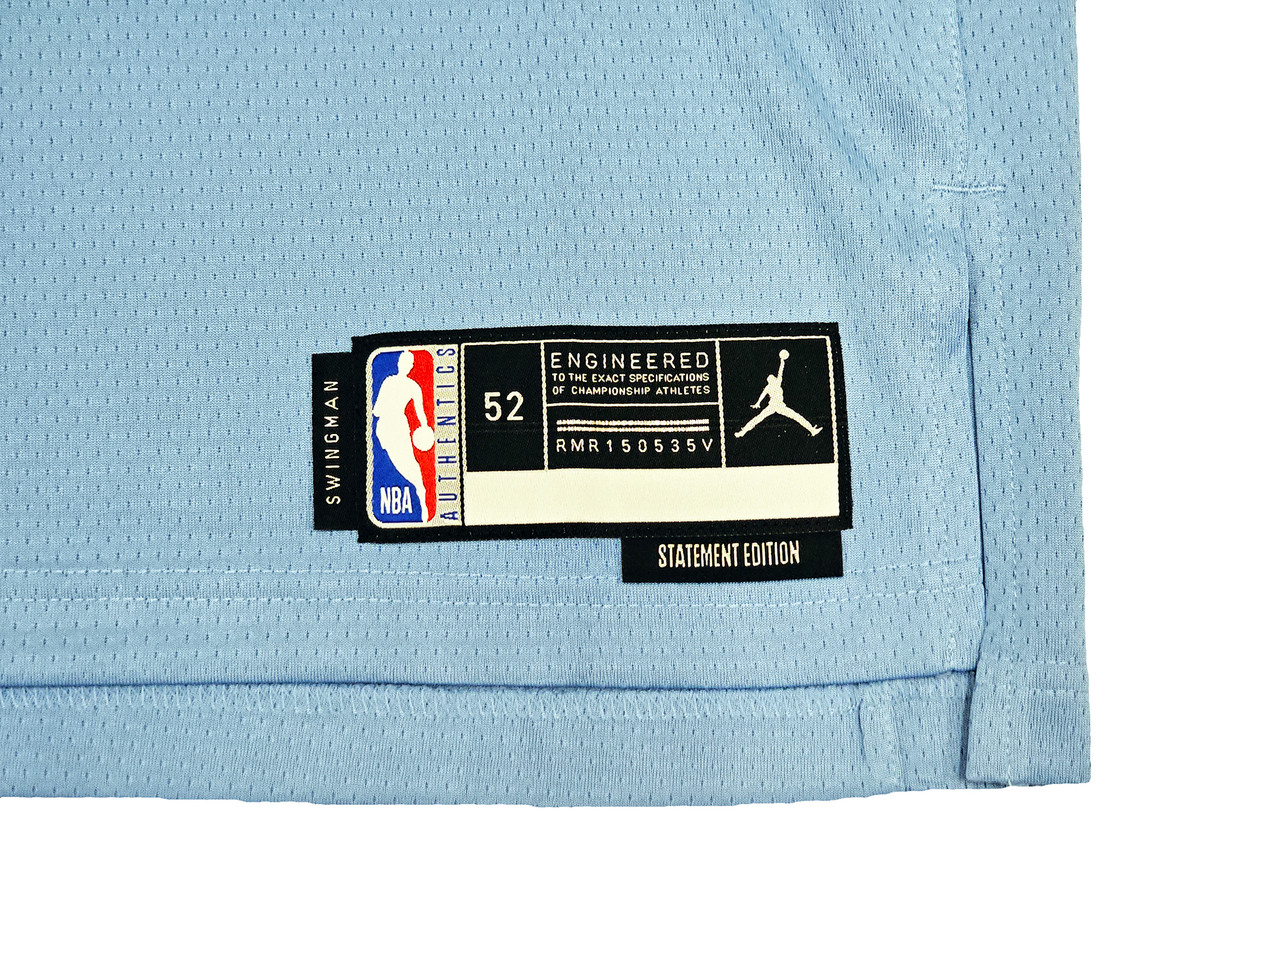 Memphis Grizzlies Ja Morant Autographed Light Blue Jordan Creators In The  Paint Select Jersey Size 52 Beckett BAS QR Stock #218583 - Mill Creek Sports